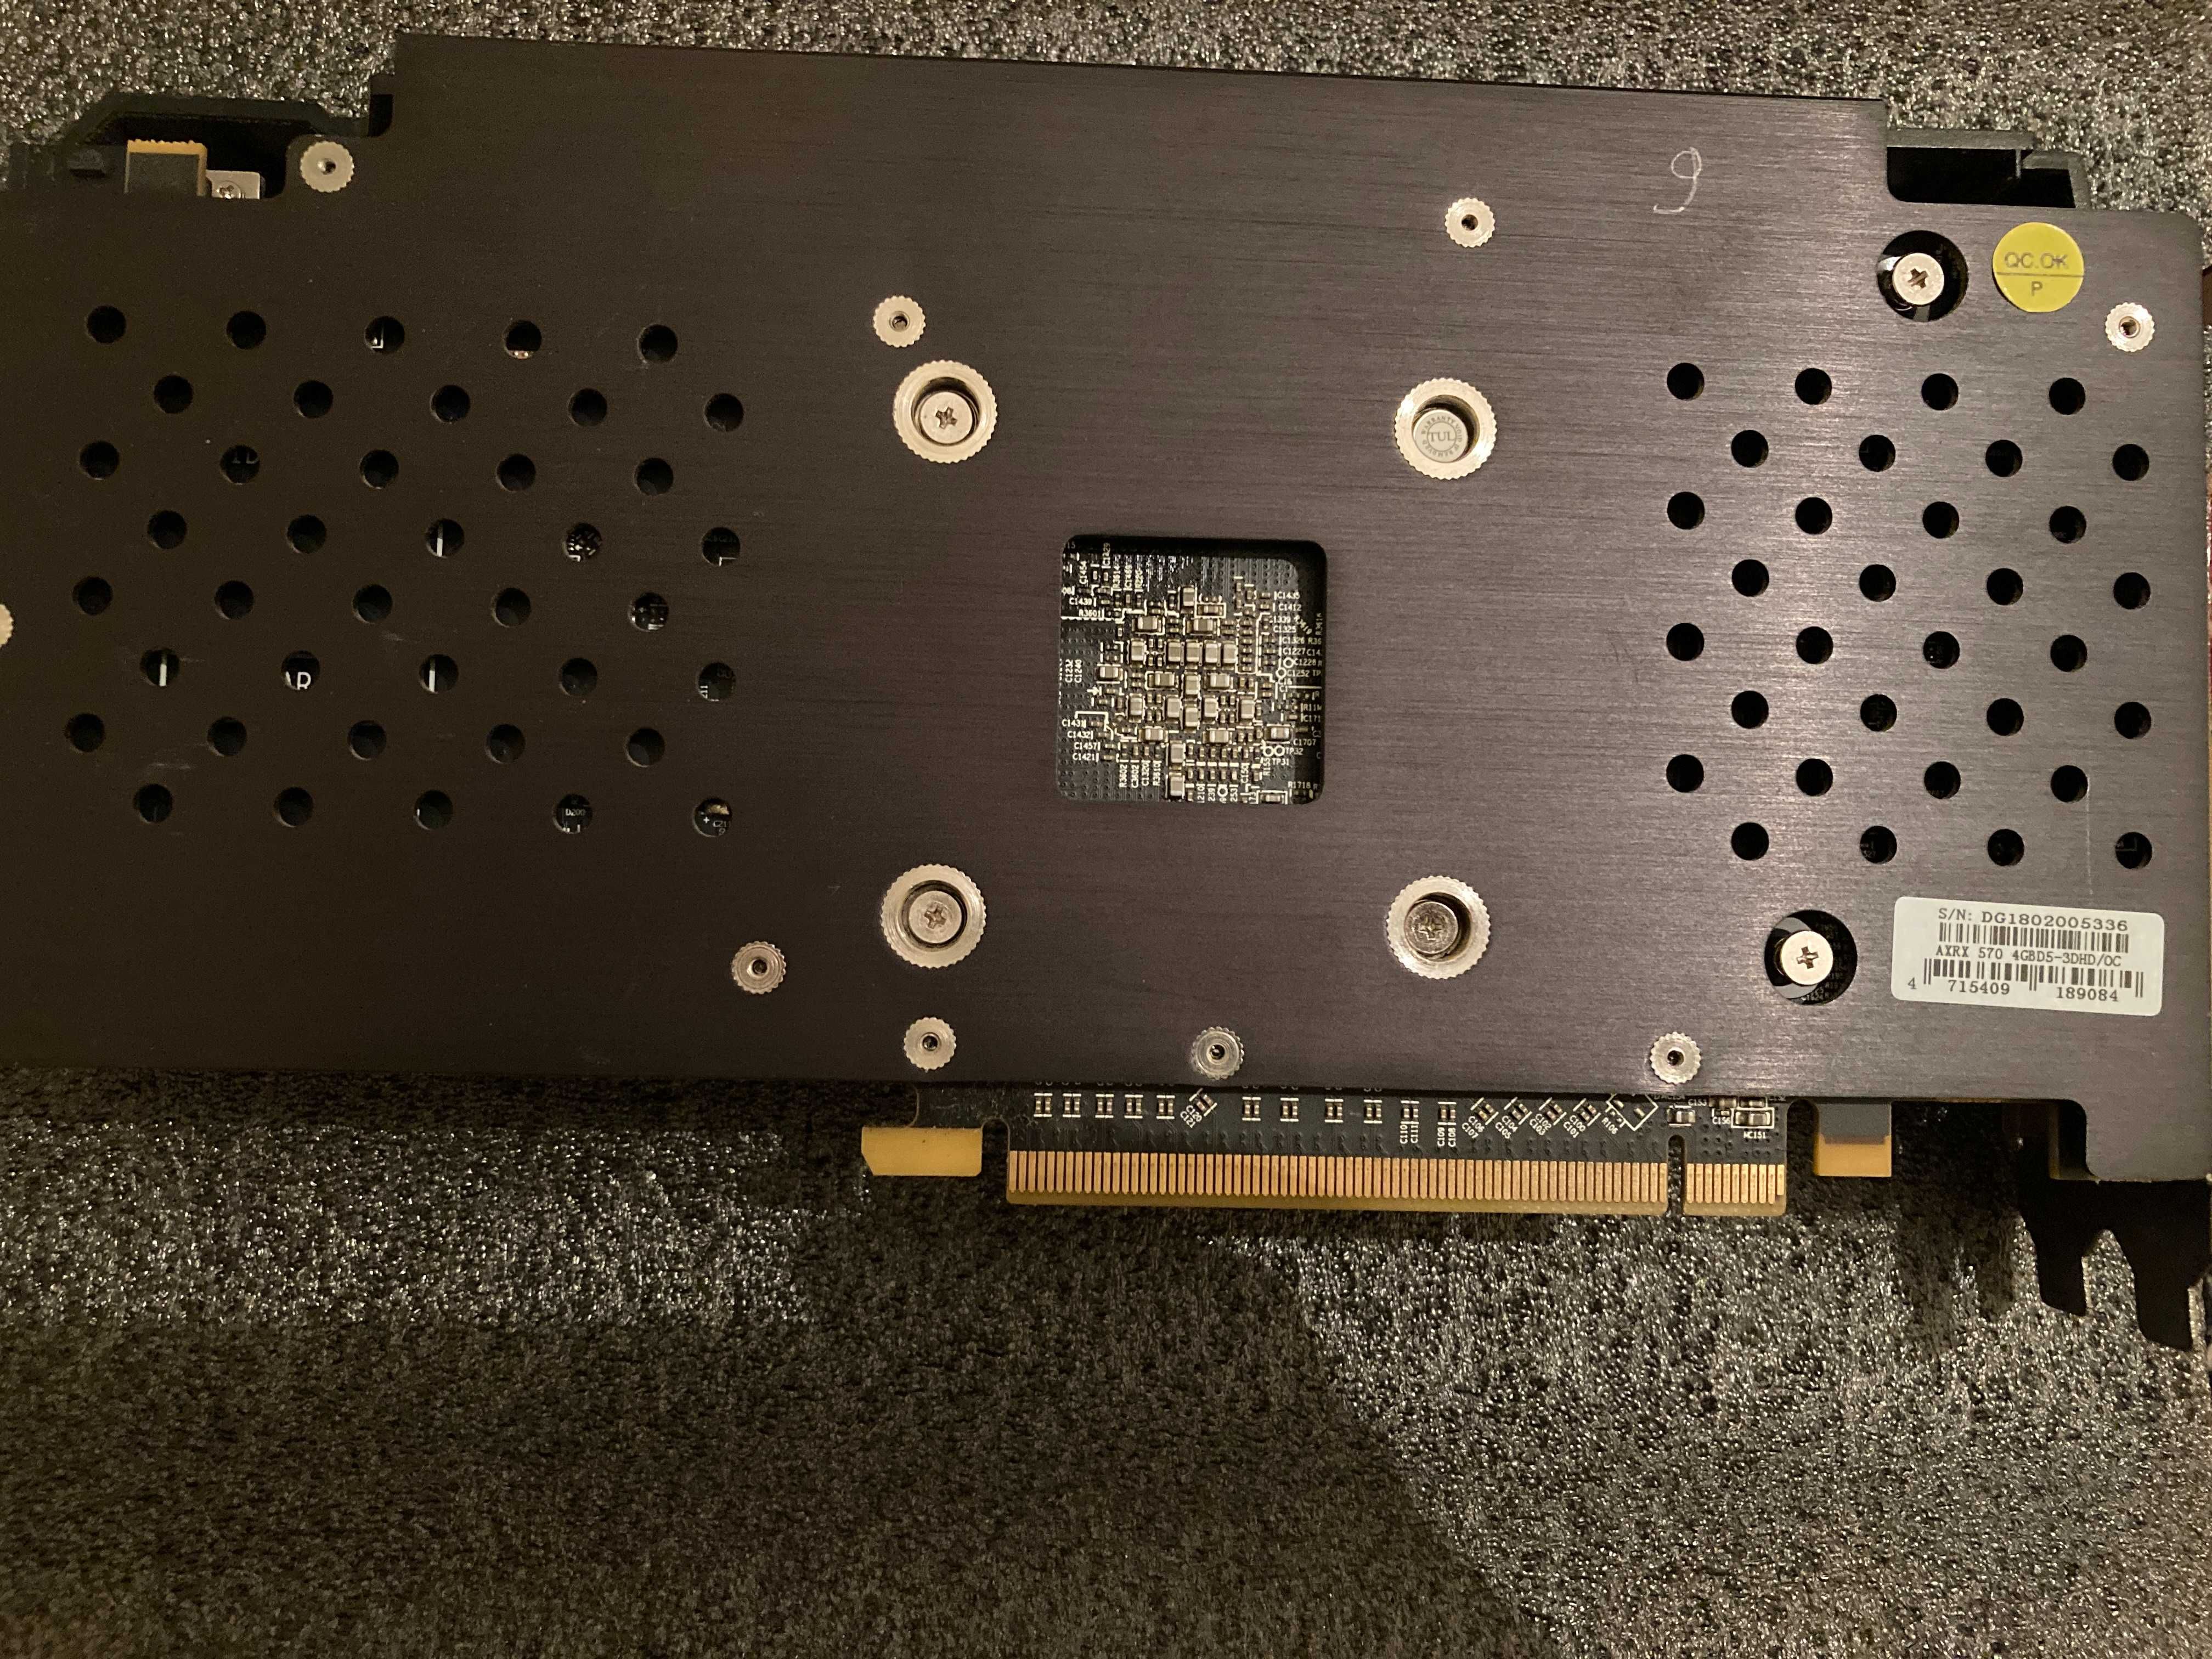 AMD Radeon PowerColor RX570 4GB видео карта